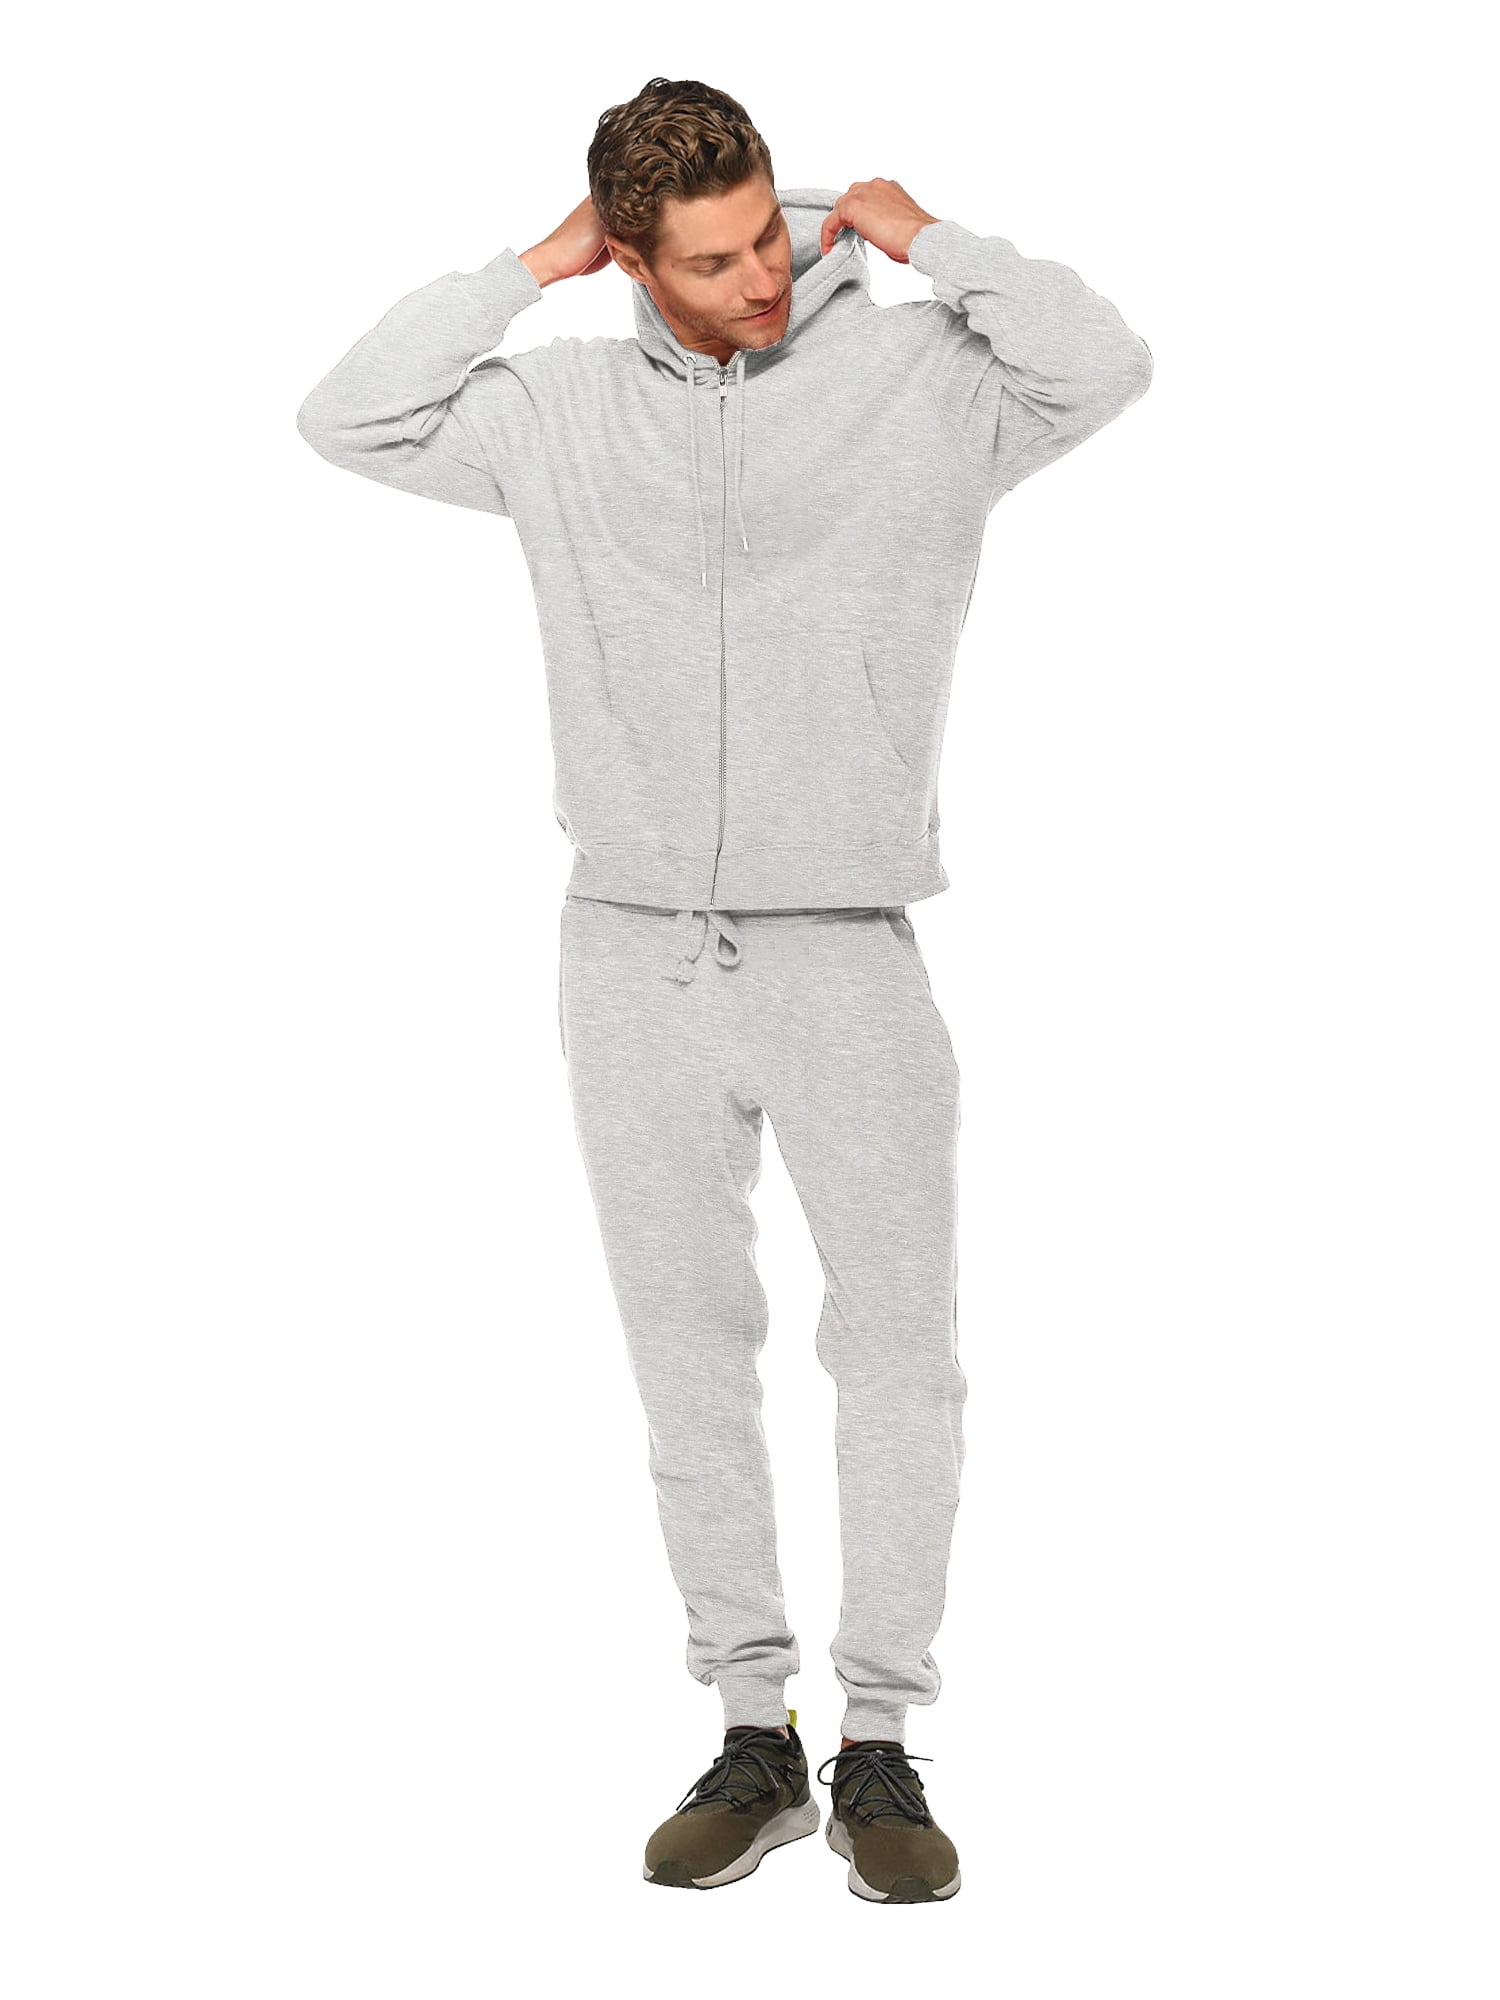 Men's Hooded Sweatshirts Tracksuit Sets Jogging Athletic Jogger Set Outfit Suits 